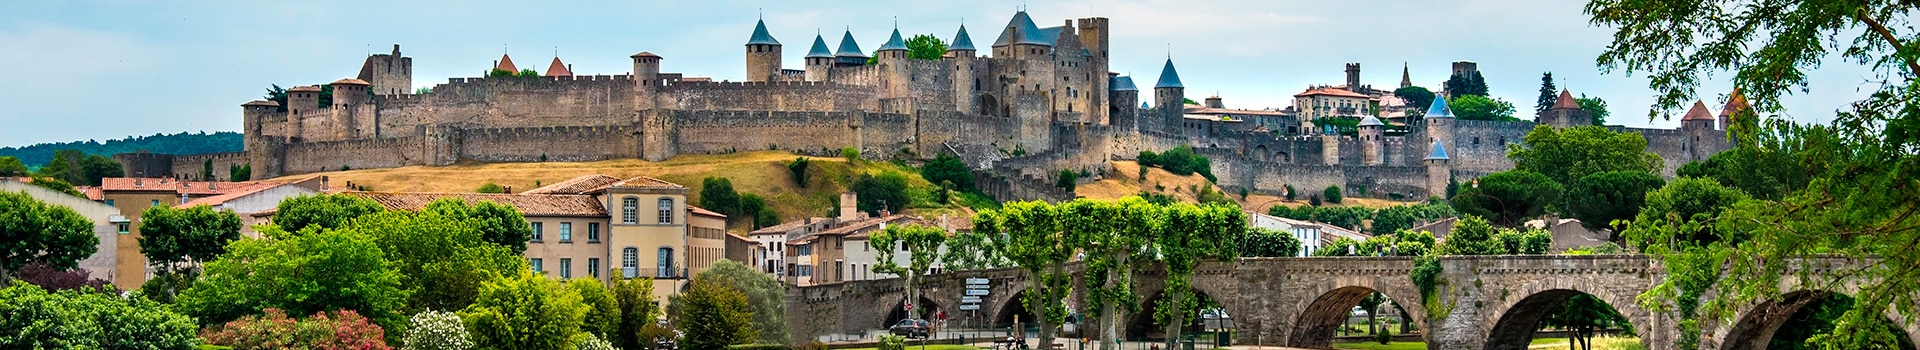 Oporto - Carcassonne